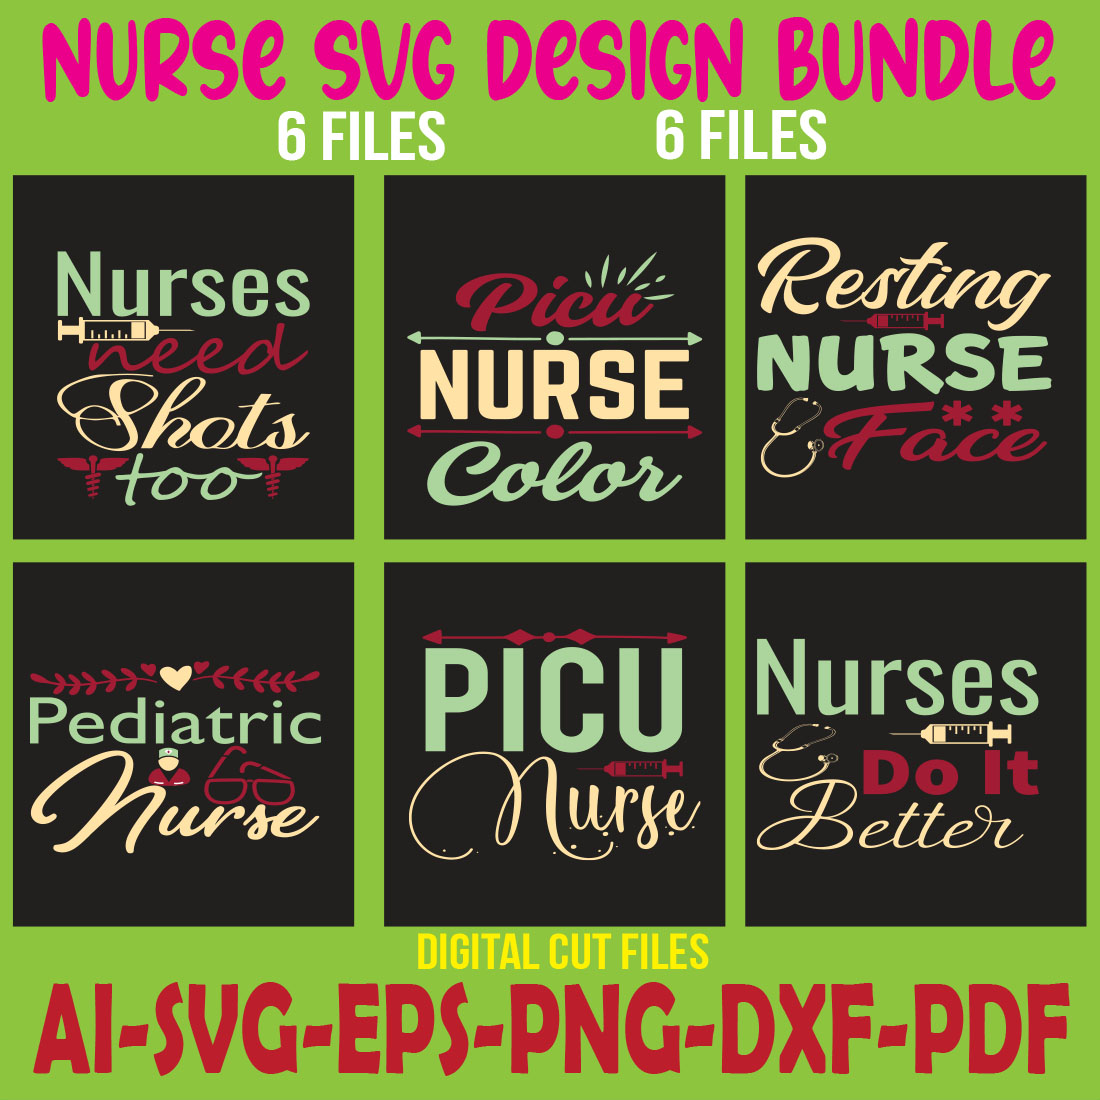 Nurse SVG Design Bundle cover image.